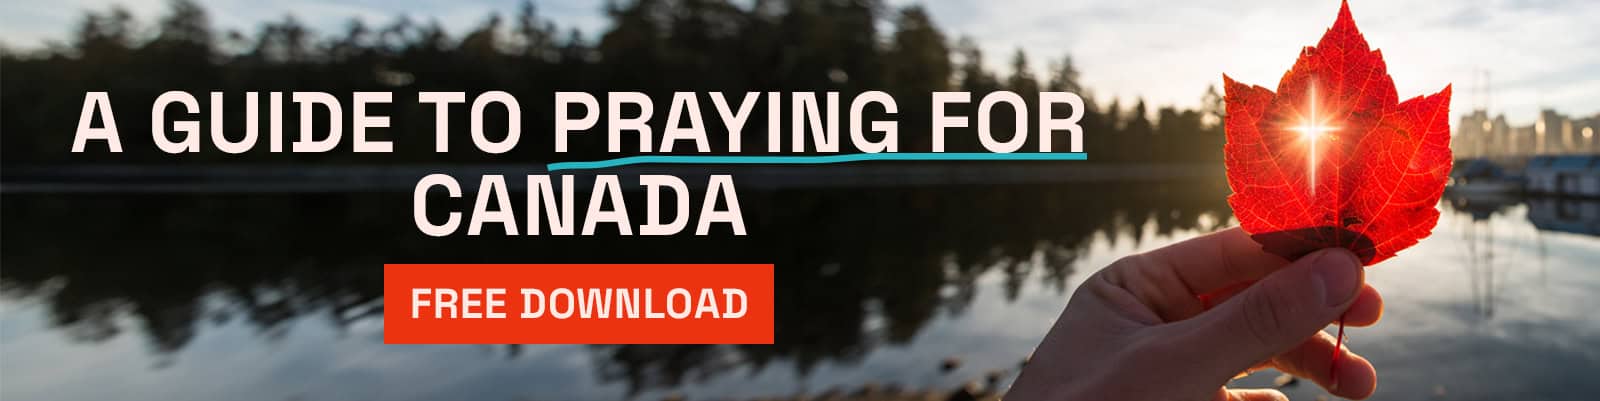 Prayer Guide For Canada